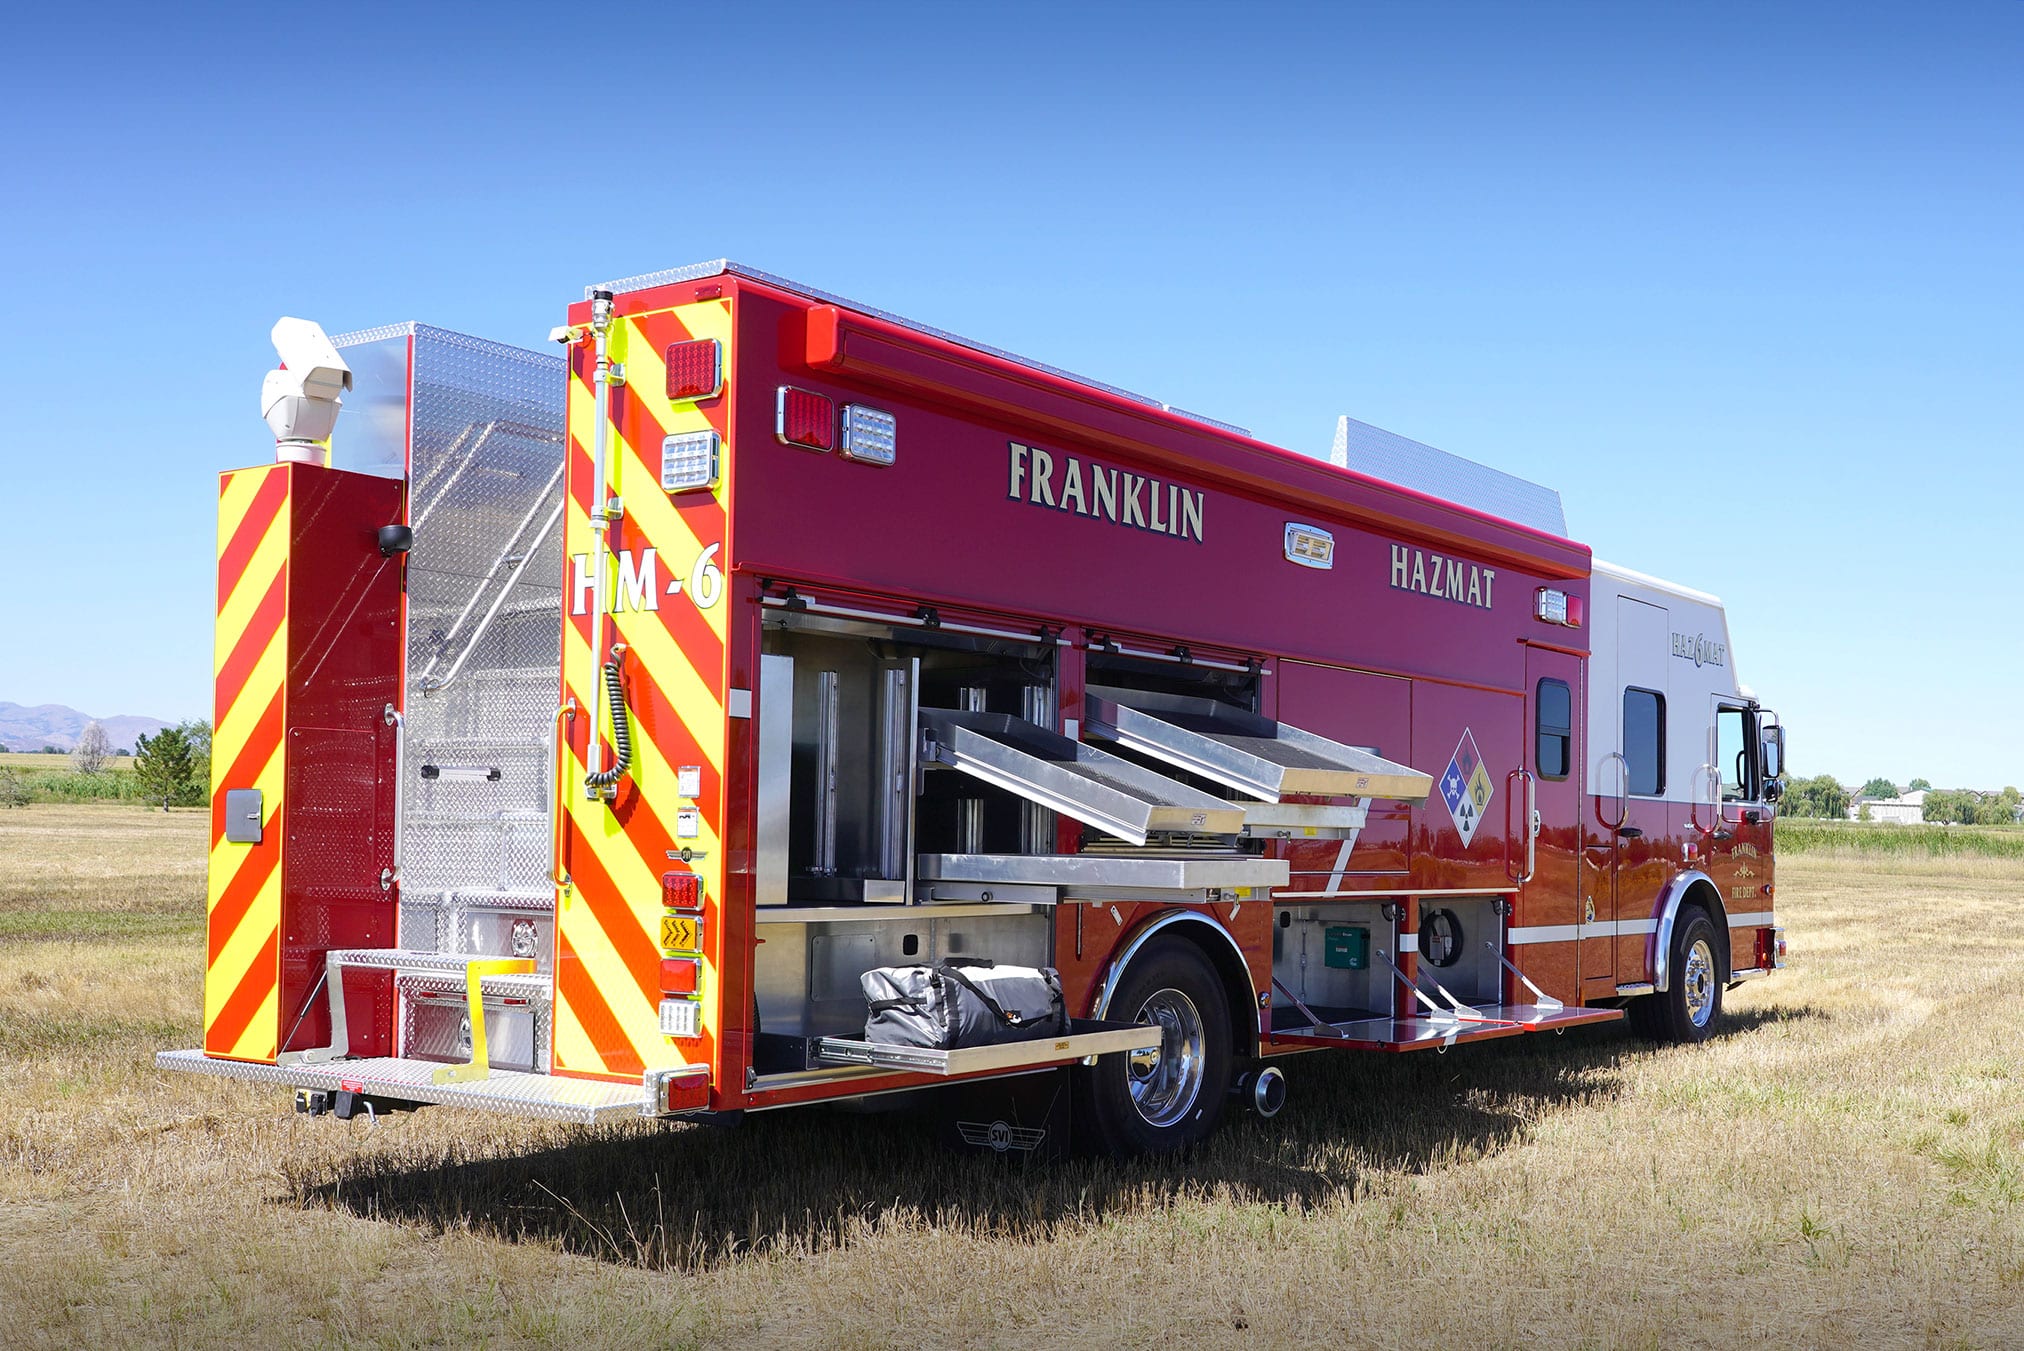 Featured image for “Franklin, TN Fire Department – Hazmat Rescue #1101”